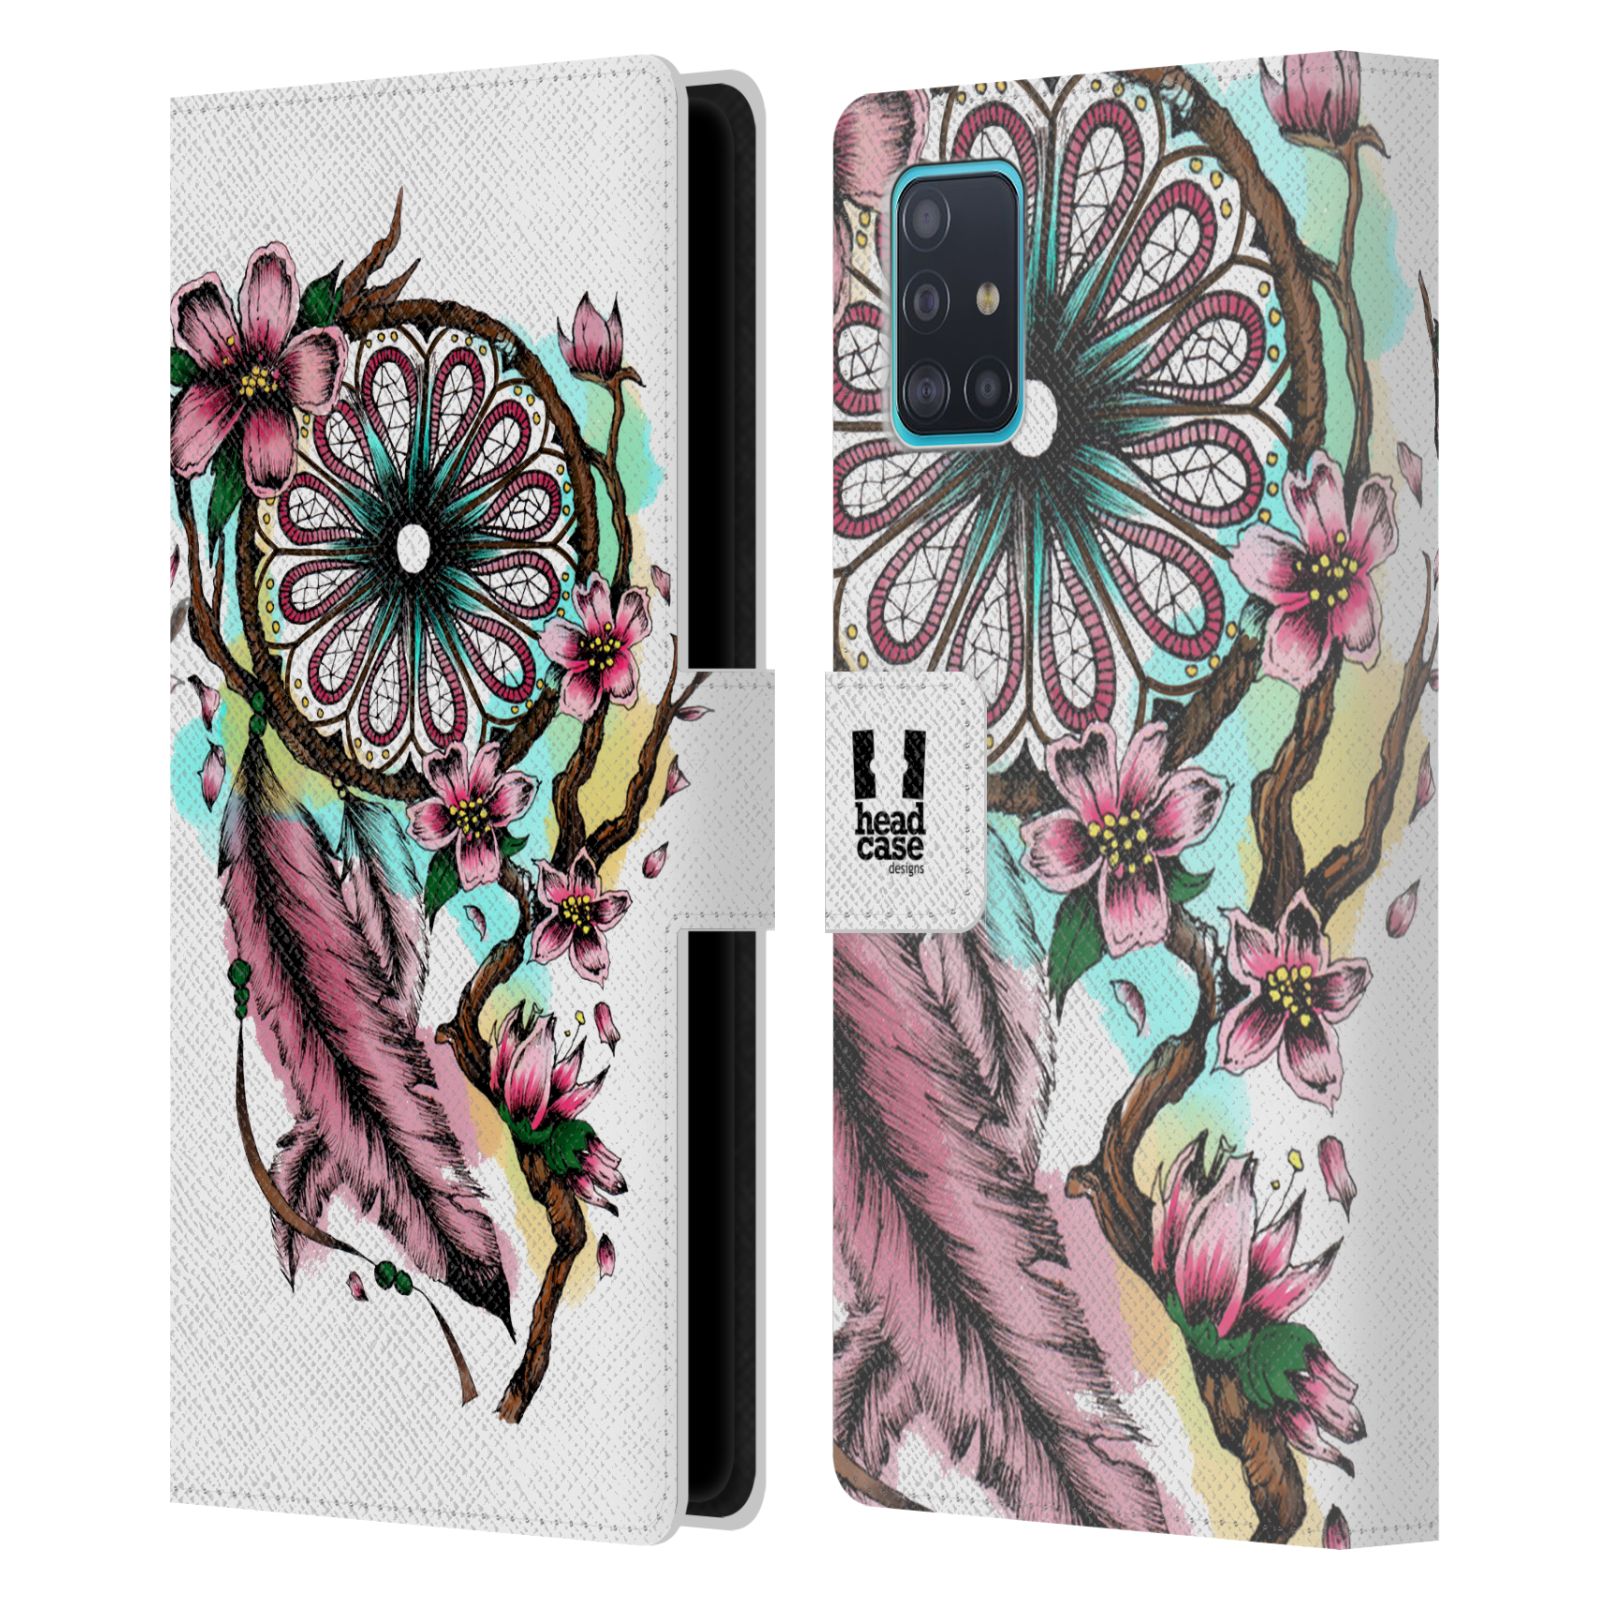 Pouzdro pro mobil Samsung Galaxy A51 - Květinový vzor lapač snů